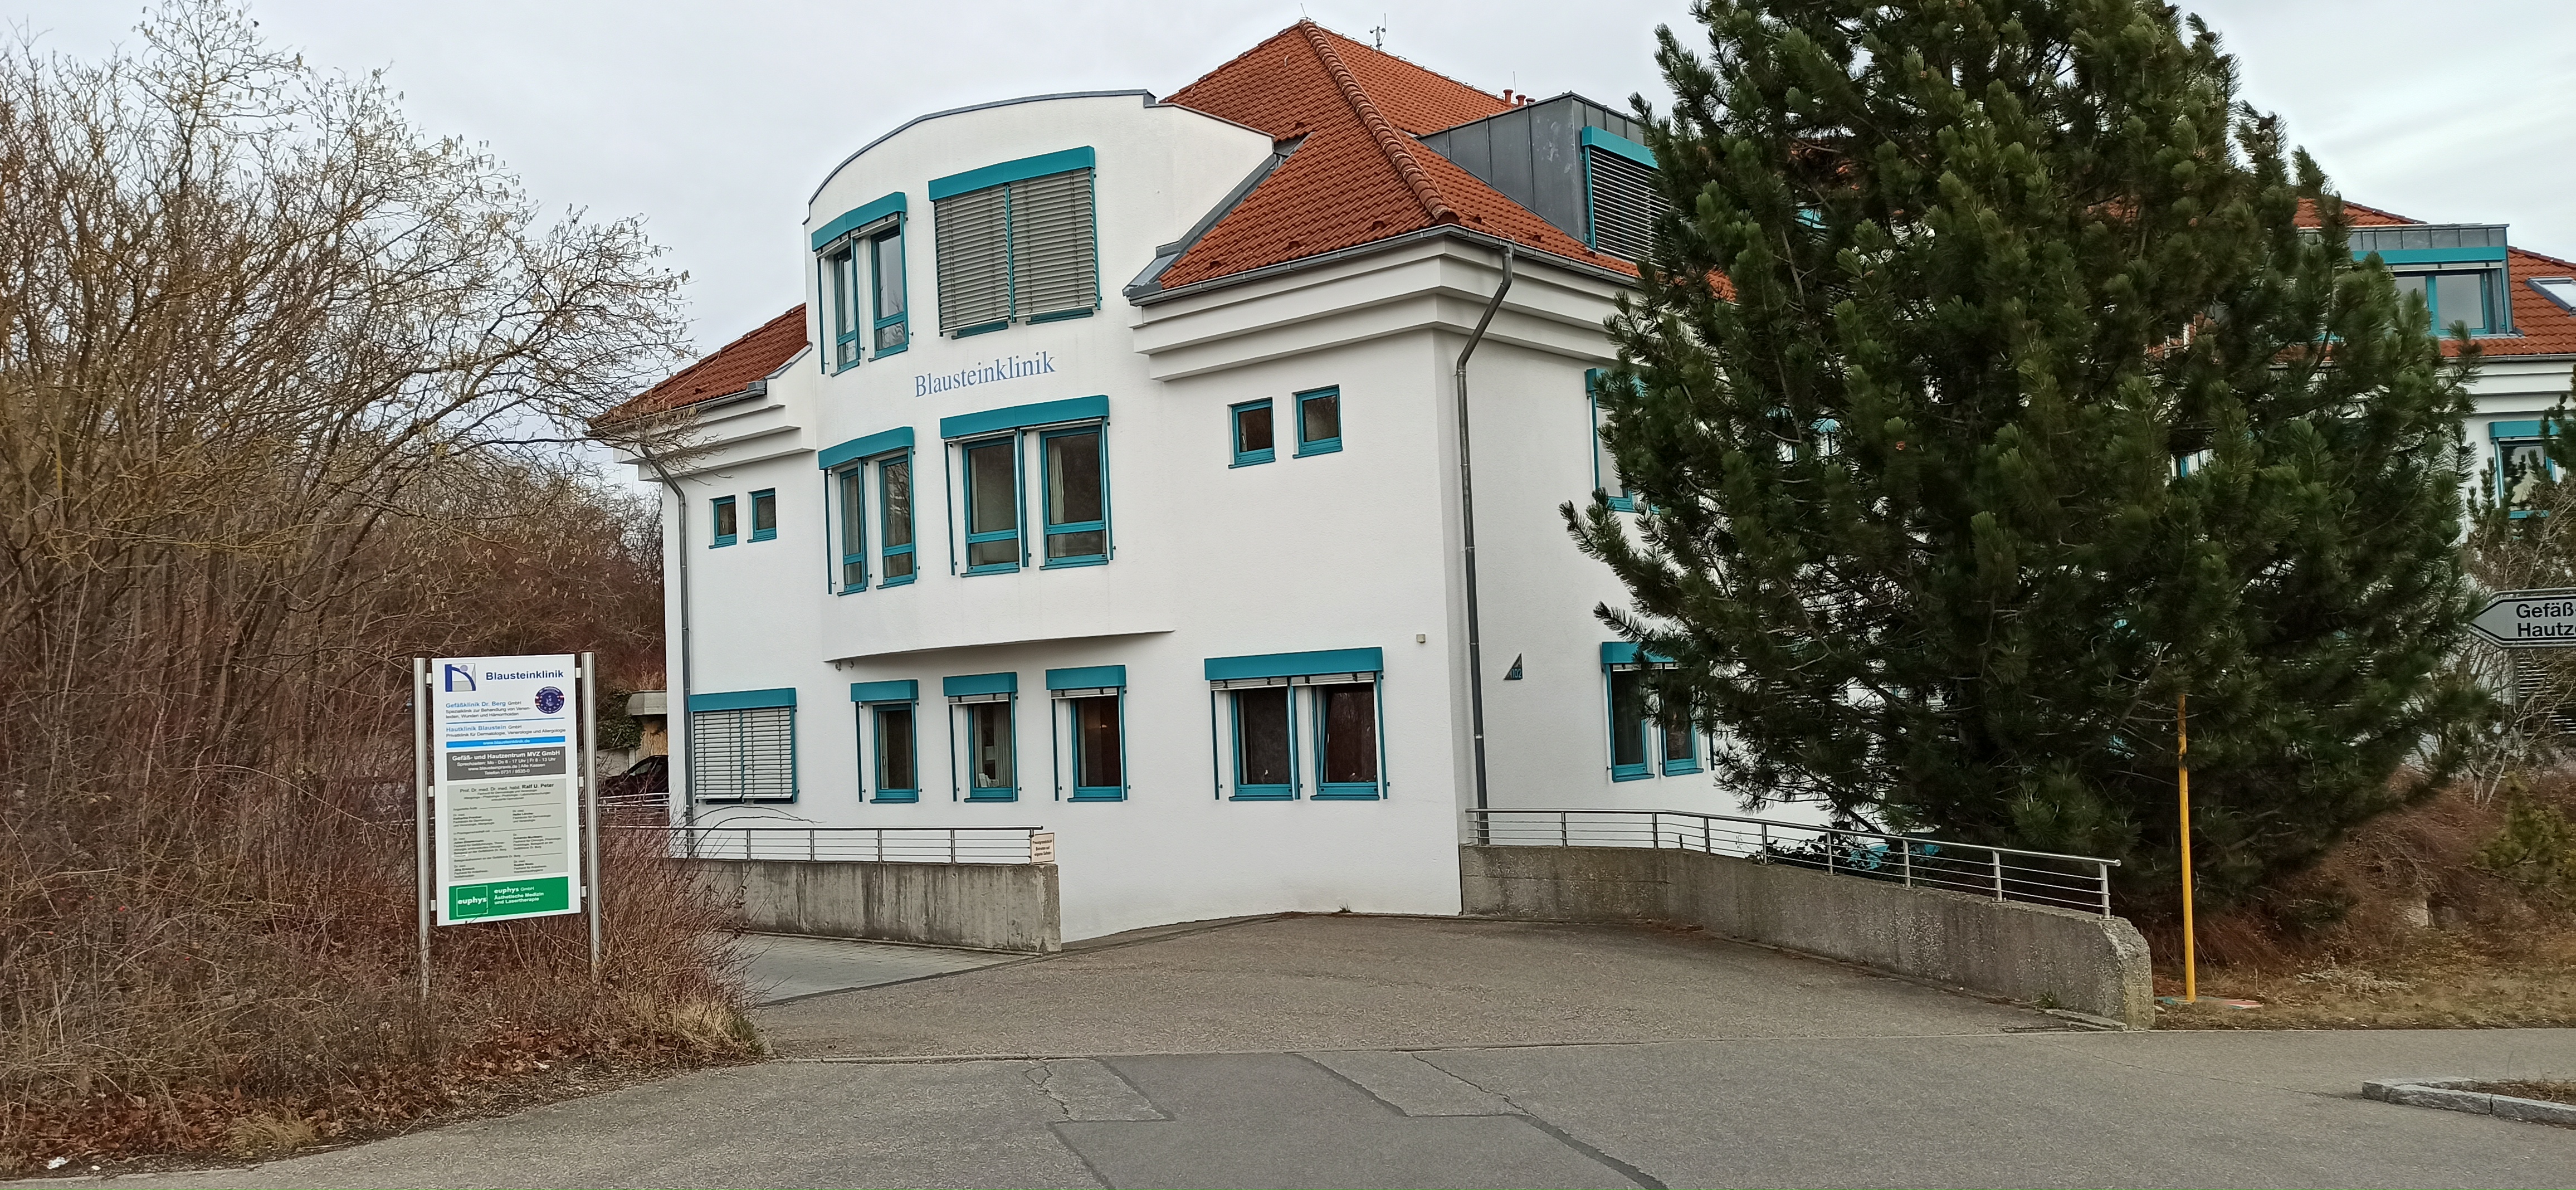 KIP Orthopädiehandel Sanitätshaus in Blaustein Gebäudeansicht